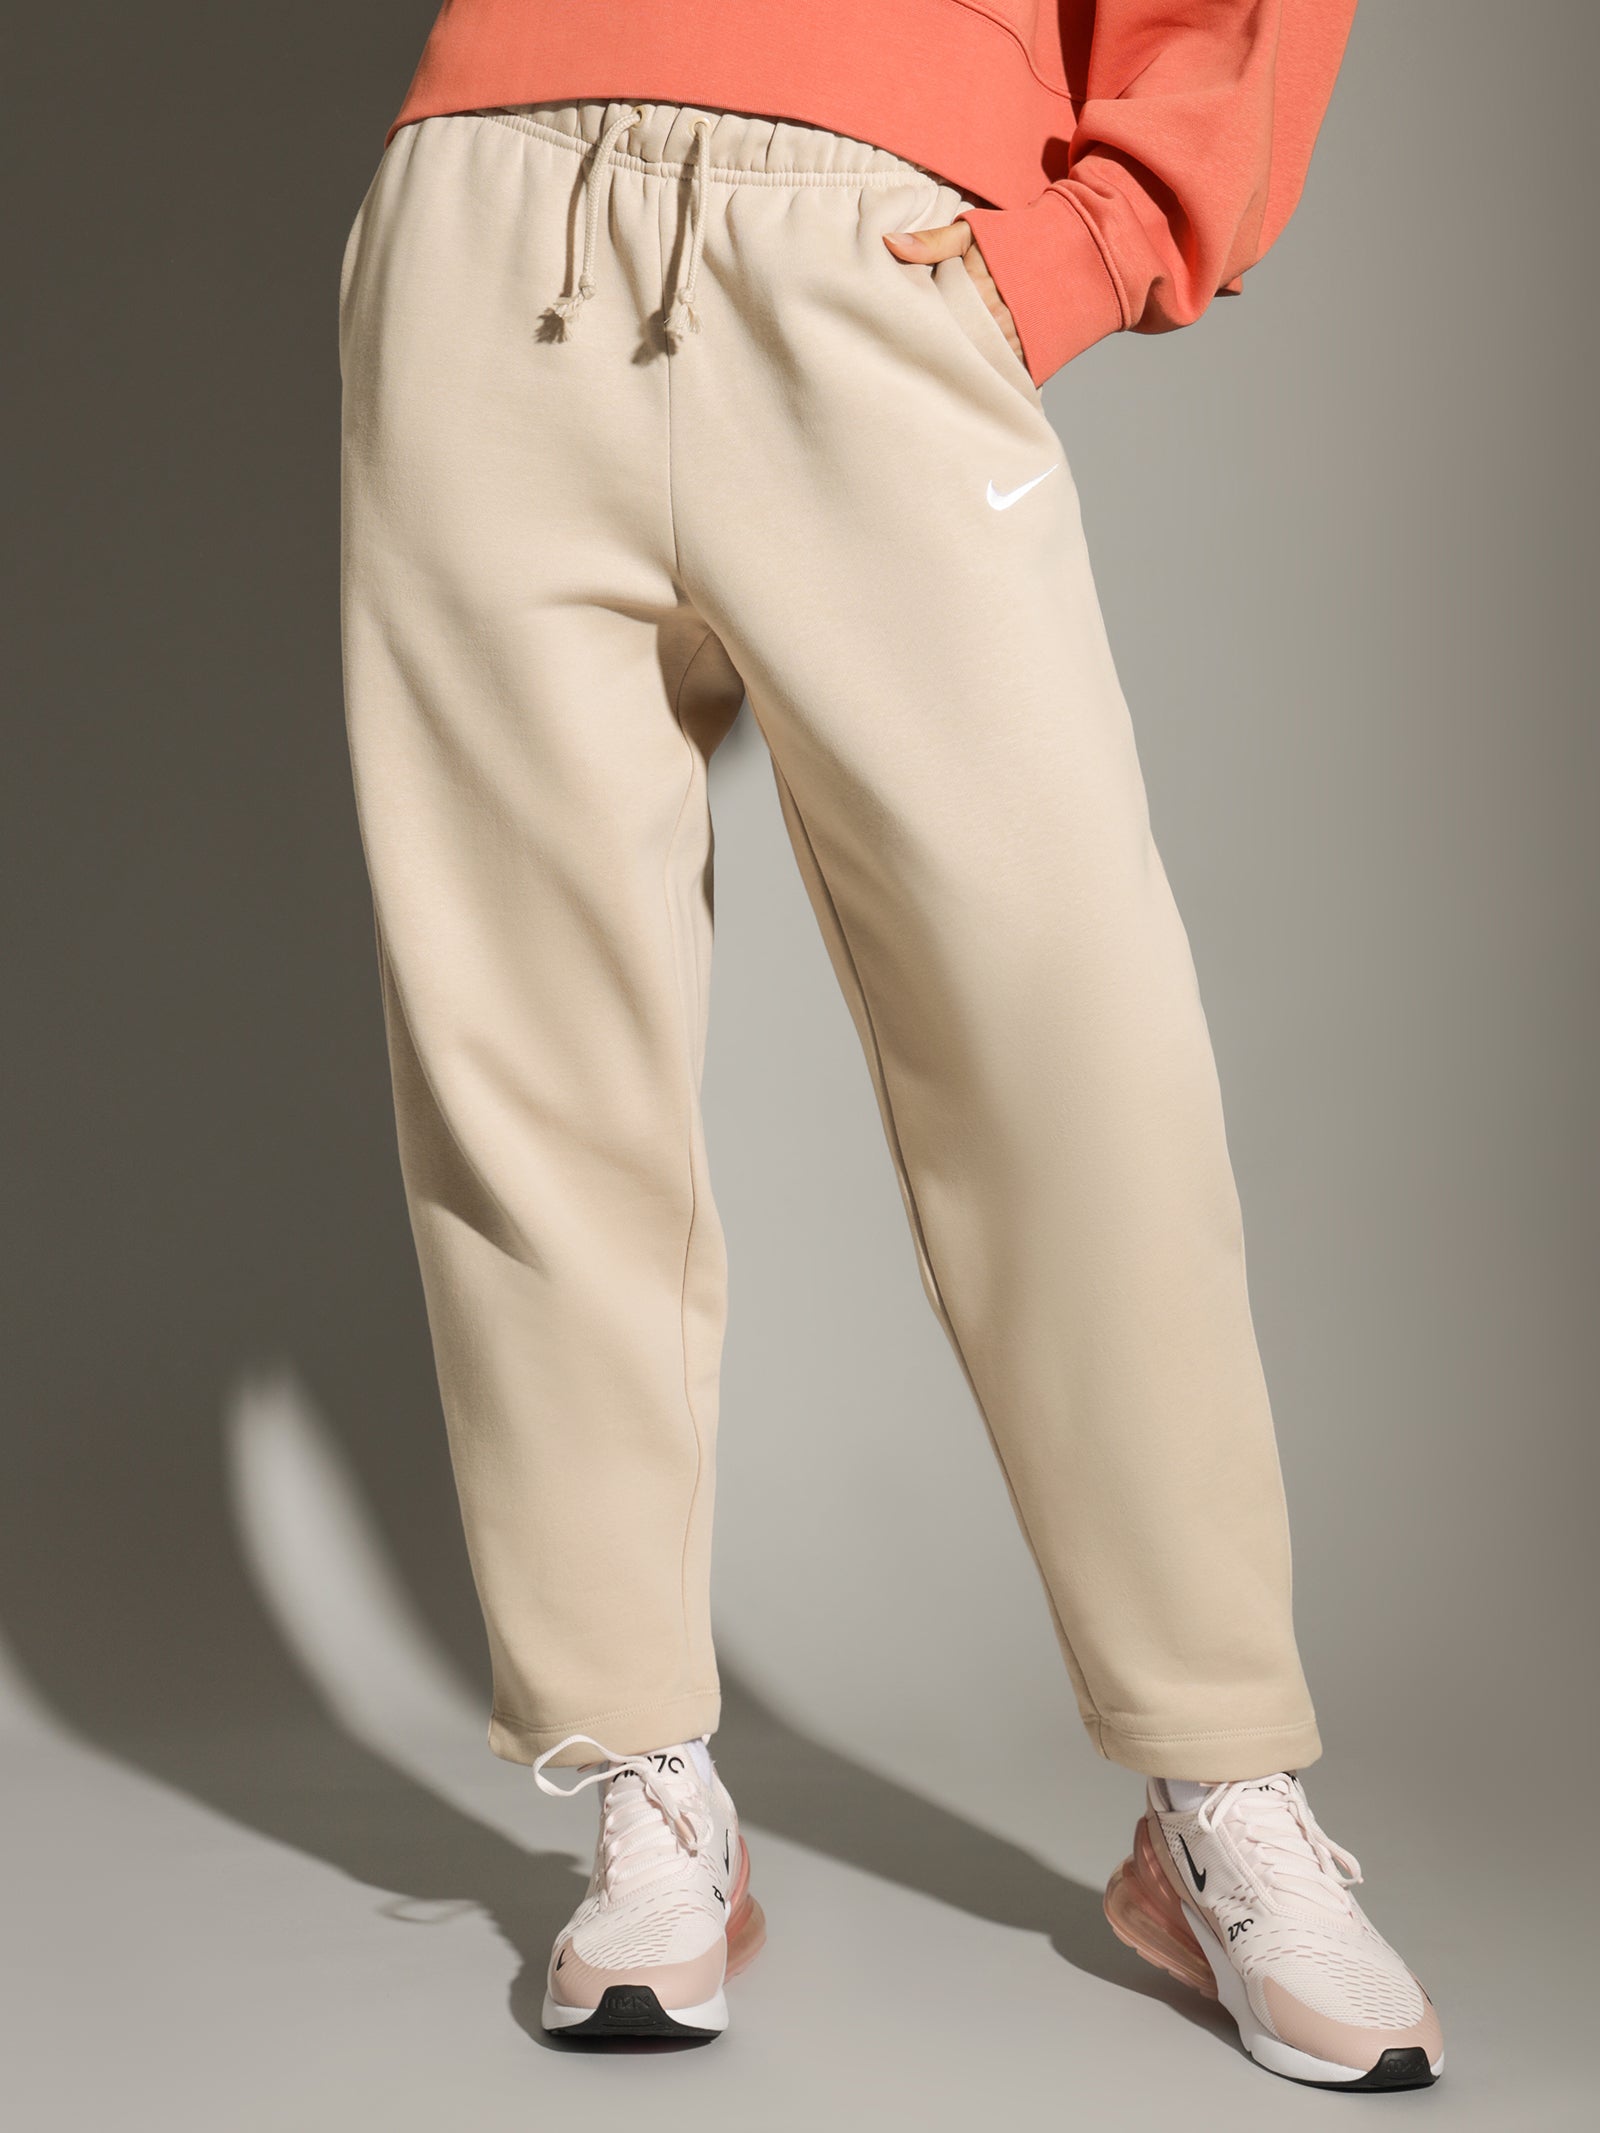 Sportswear Essential Collection Fleece Pants in Sand Drift - Glue Store